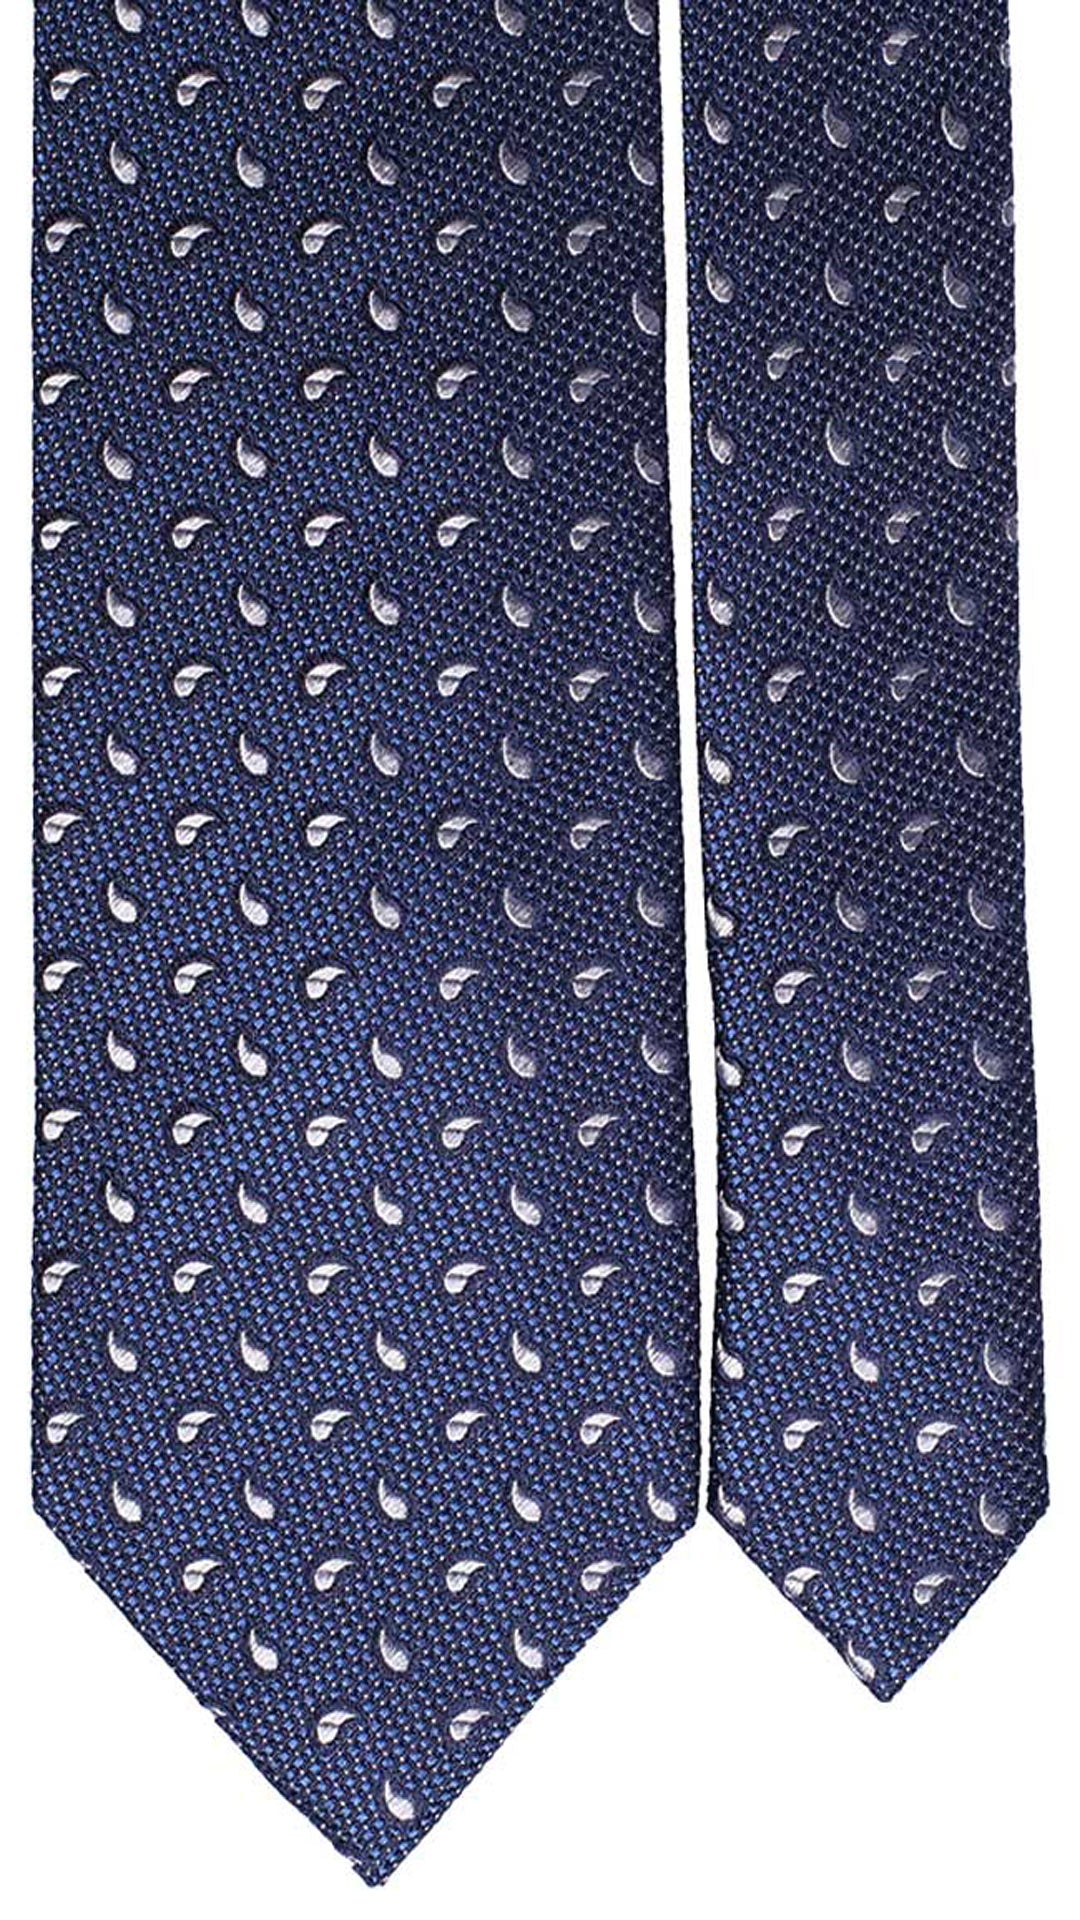 Cravatta da Cerimonia di Seta Blu Navy Paisley Punto a Spillo Bianco CY4697 Pala